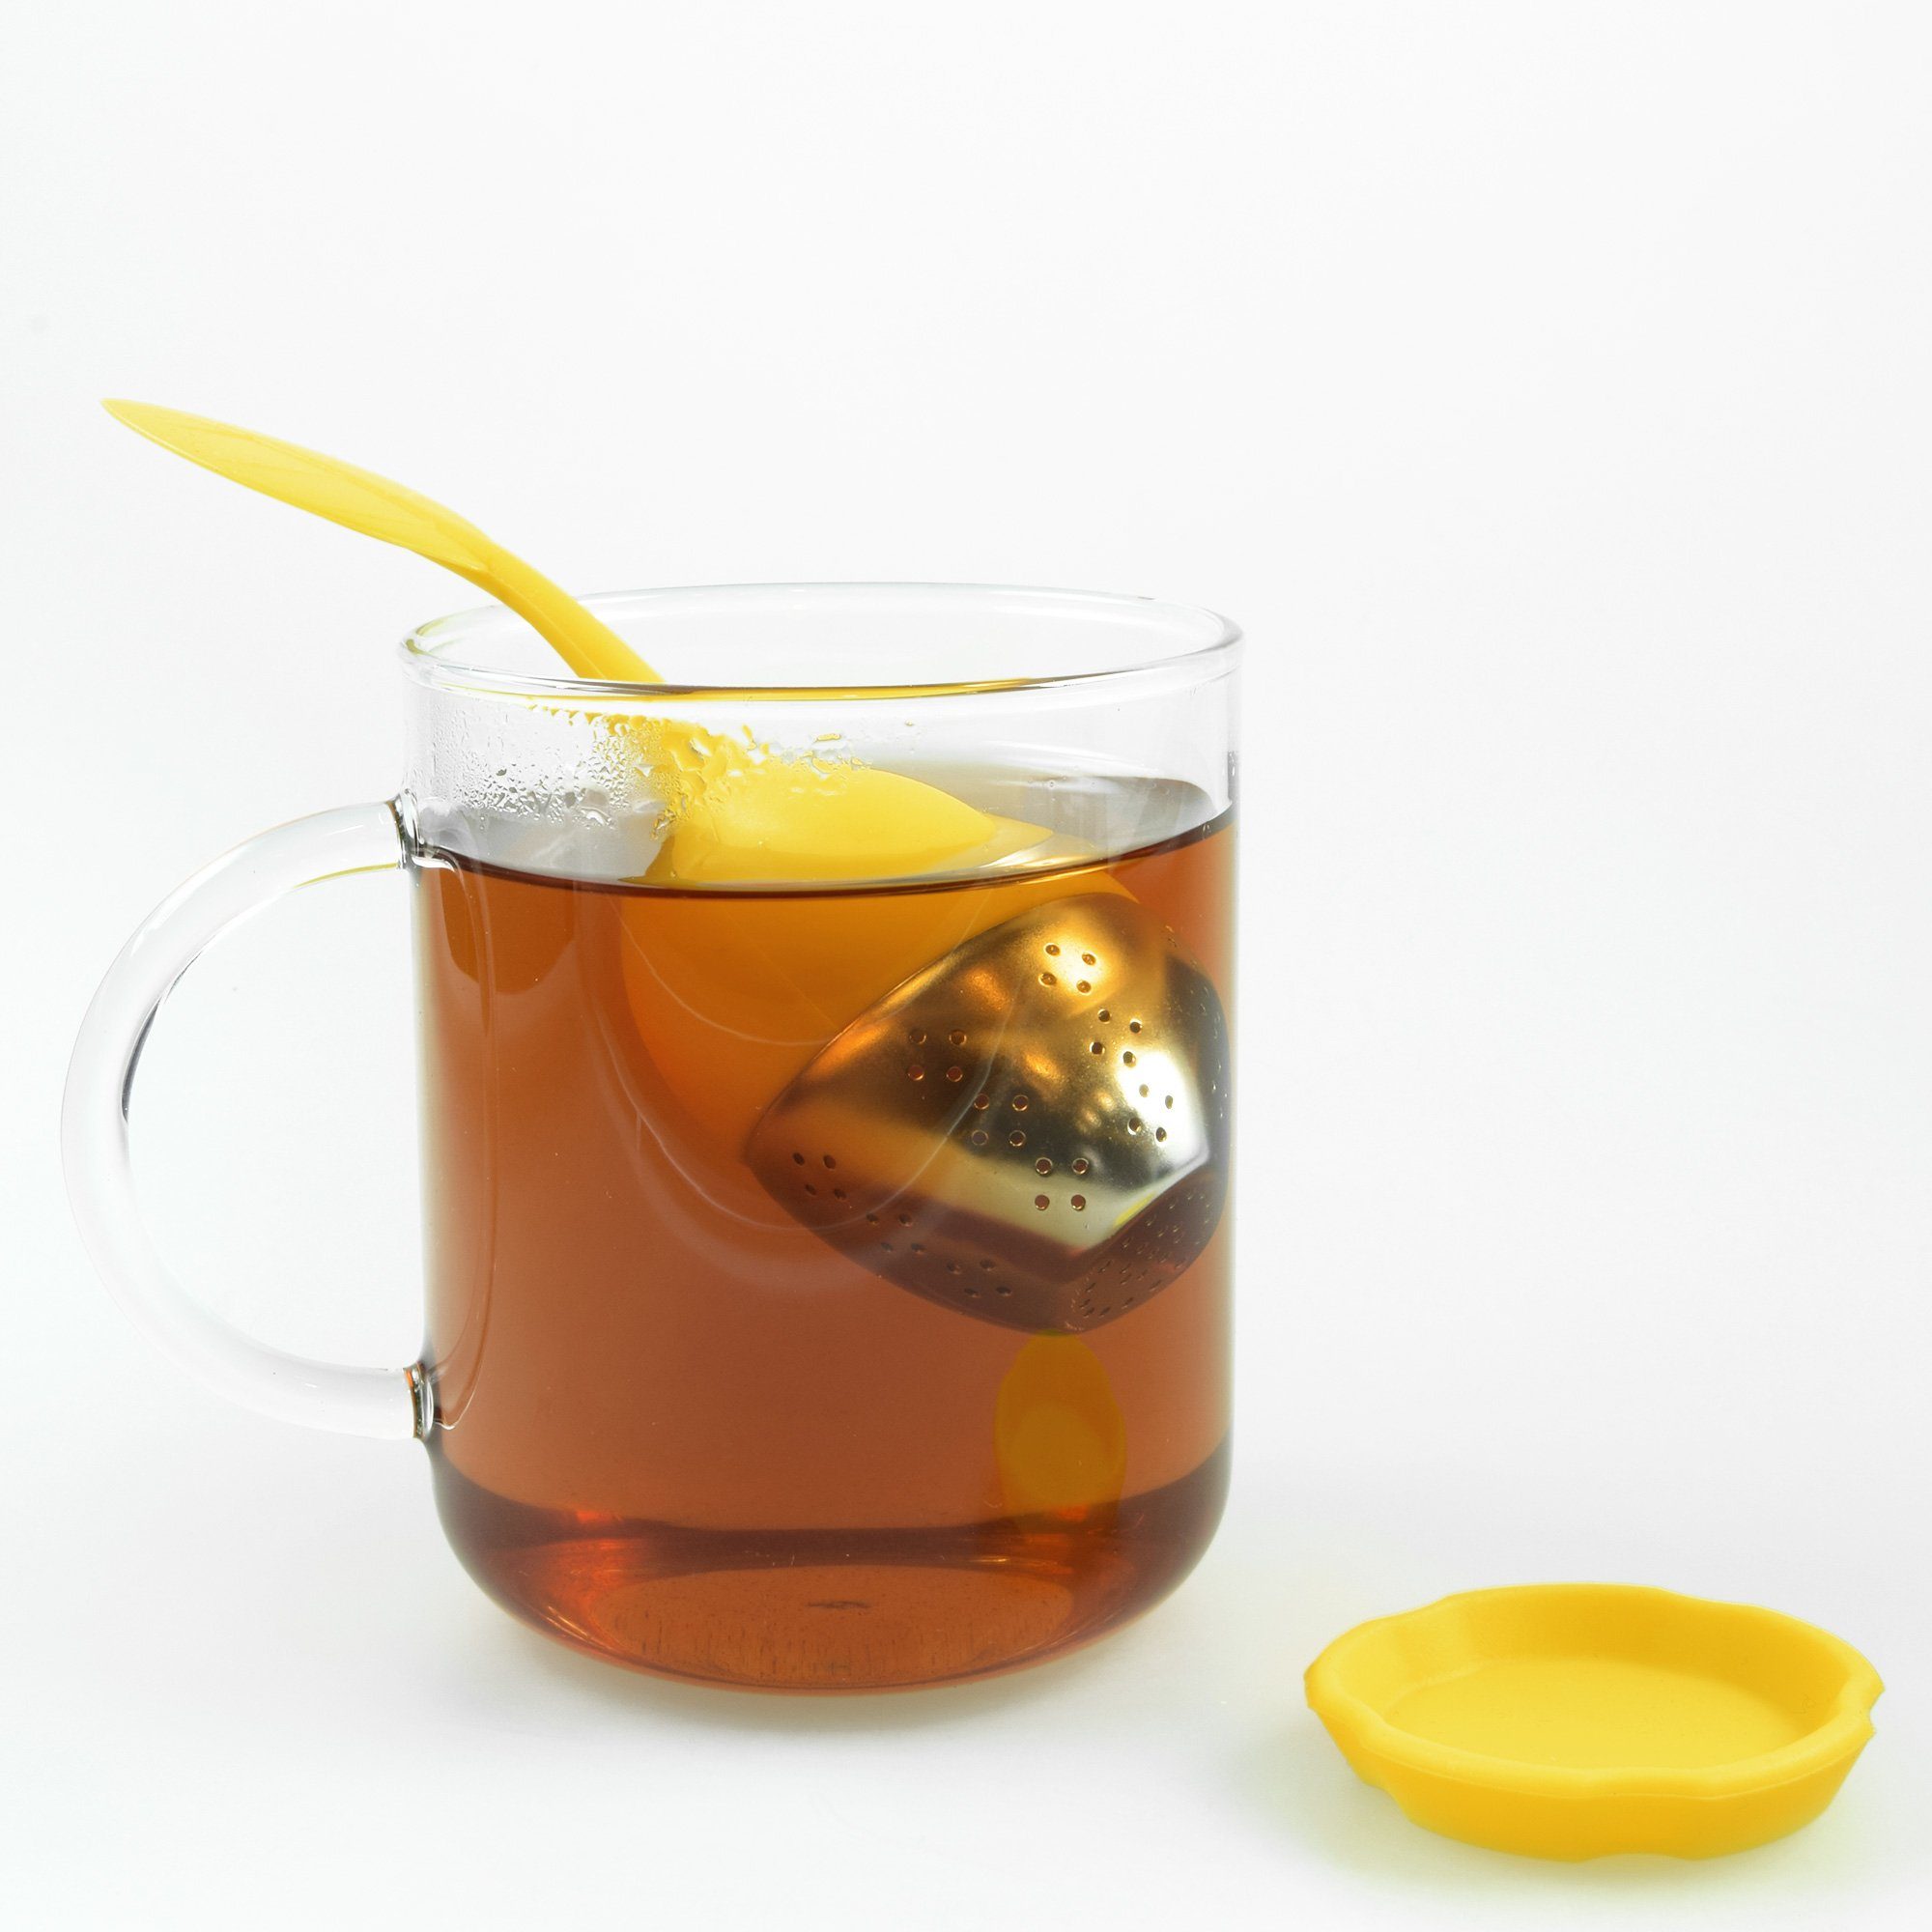 PhoneNatic Teesieb Niedliches Edelstahl-Sieb BlattSilikon Tee-Ei mit (BPA-frei) Gelb